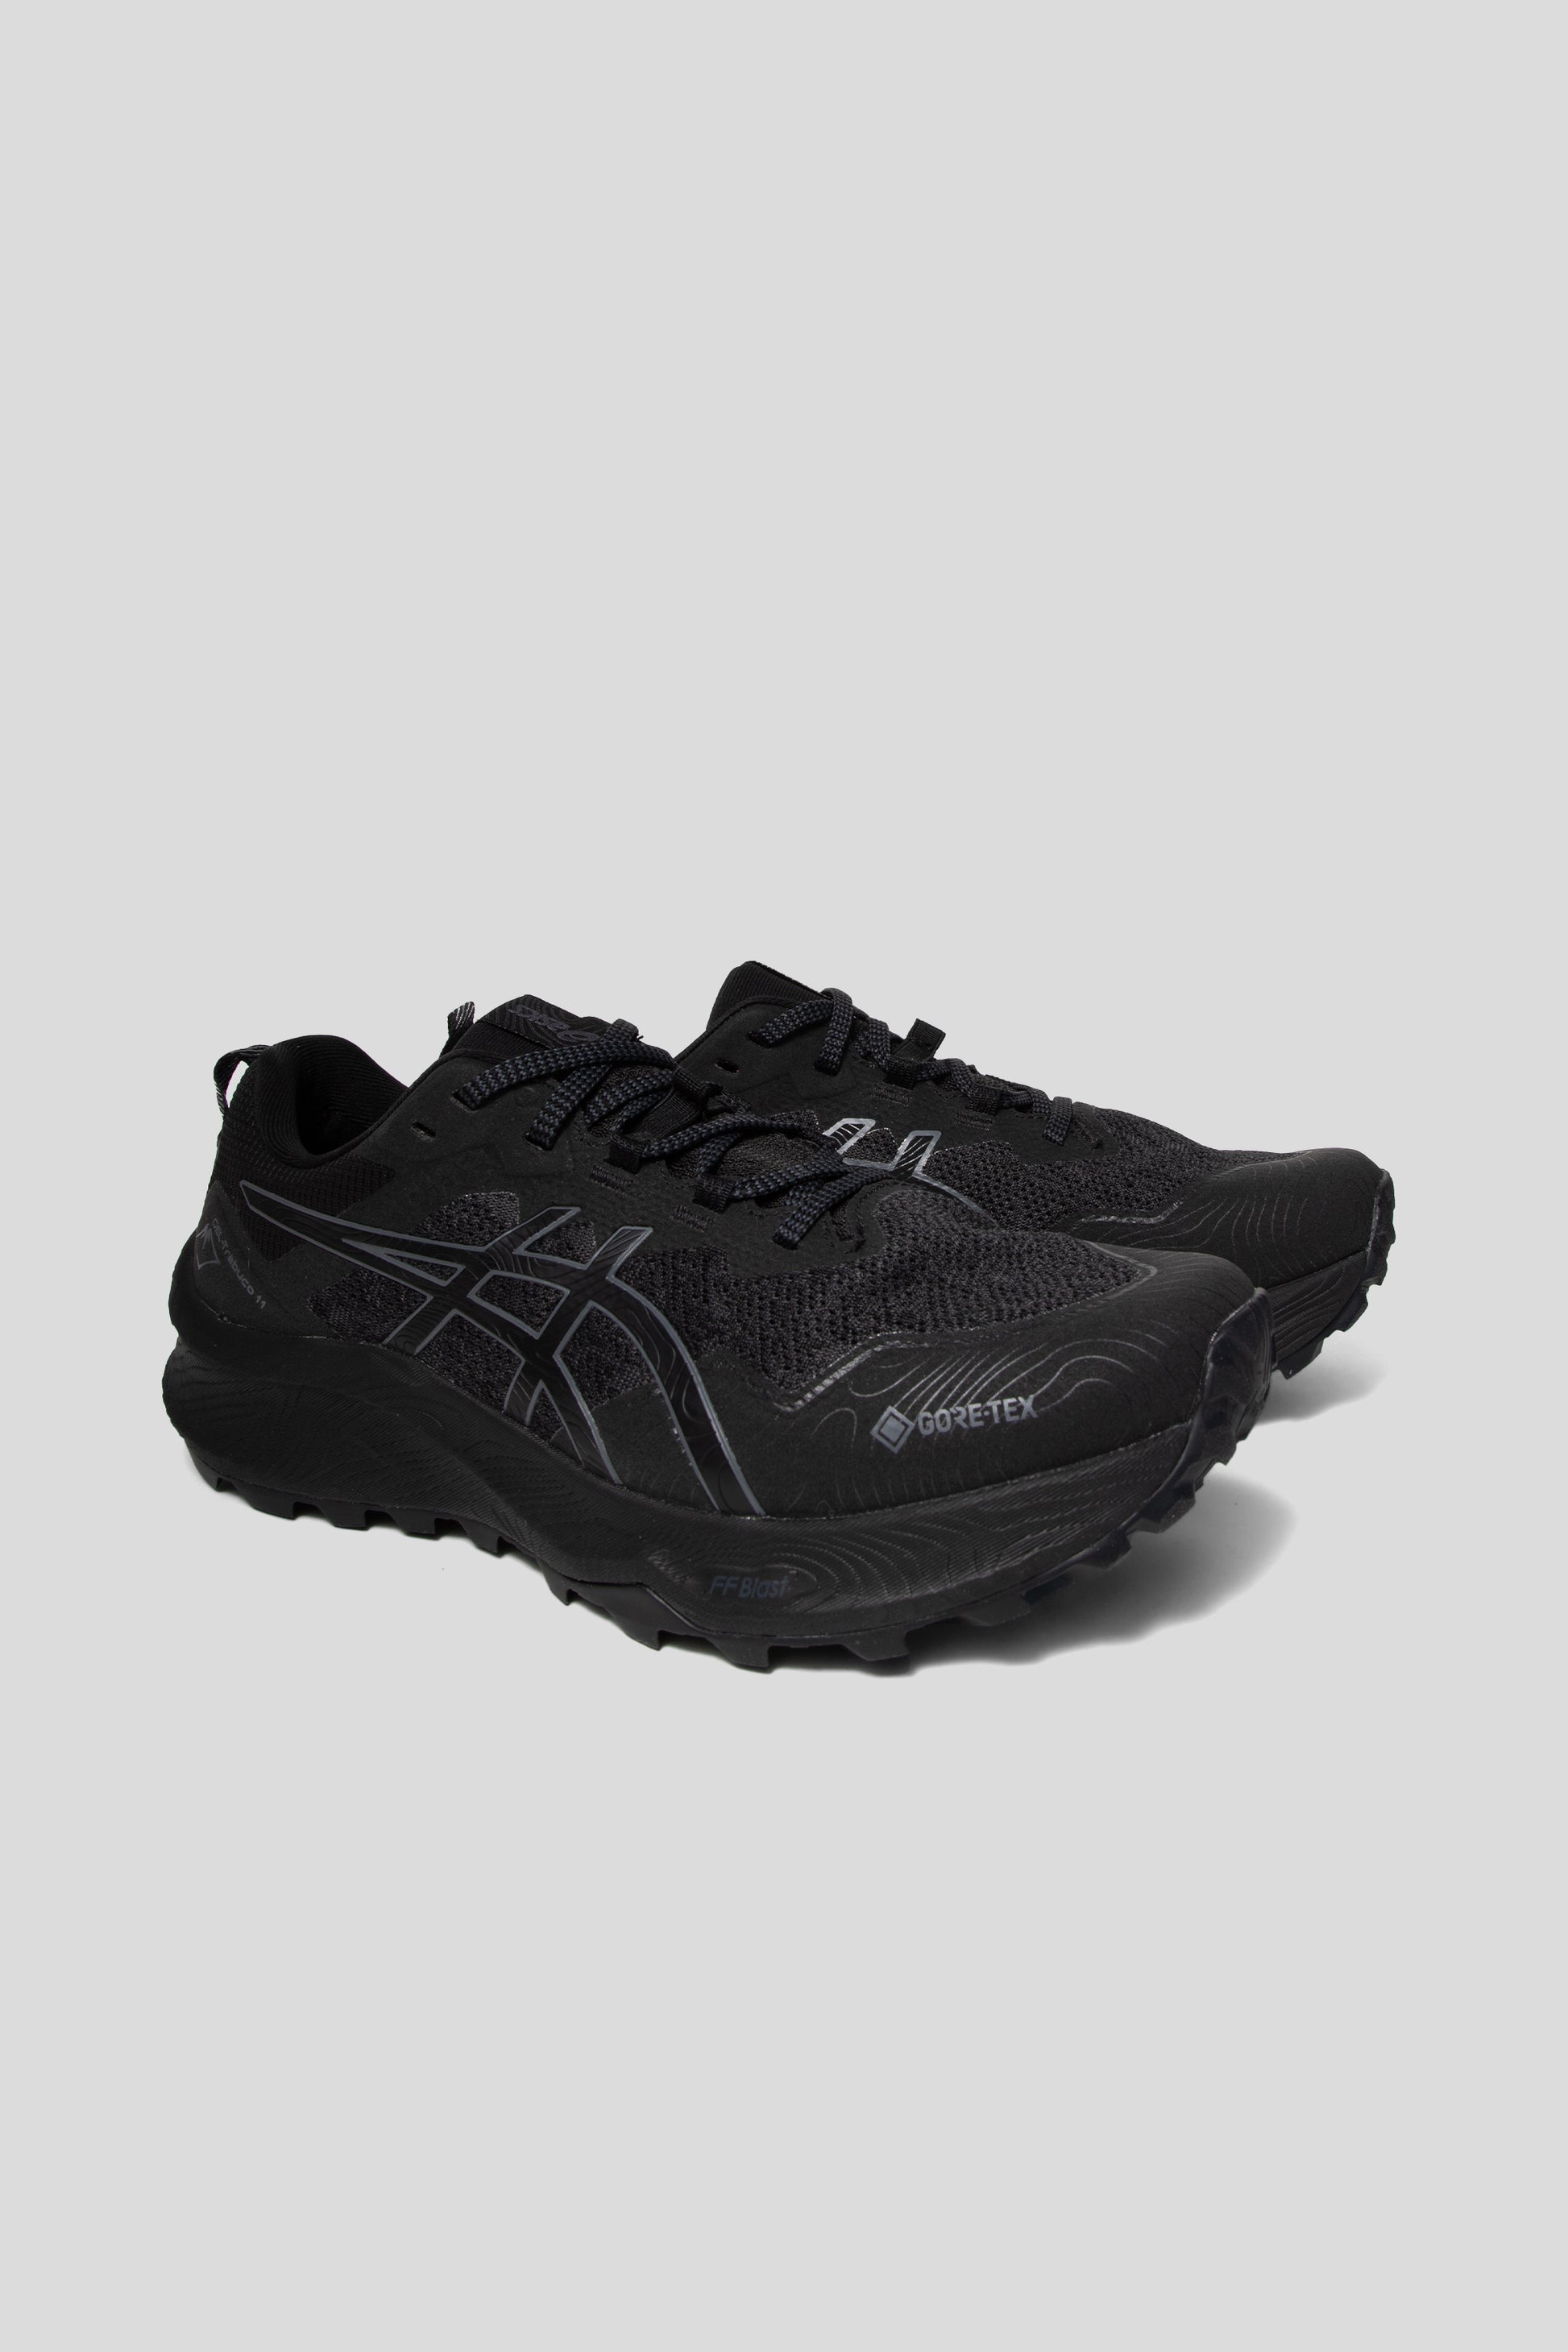 Asics Trabuco 11 GTX Shoe in Black/Carrier Grey